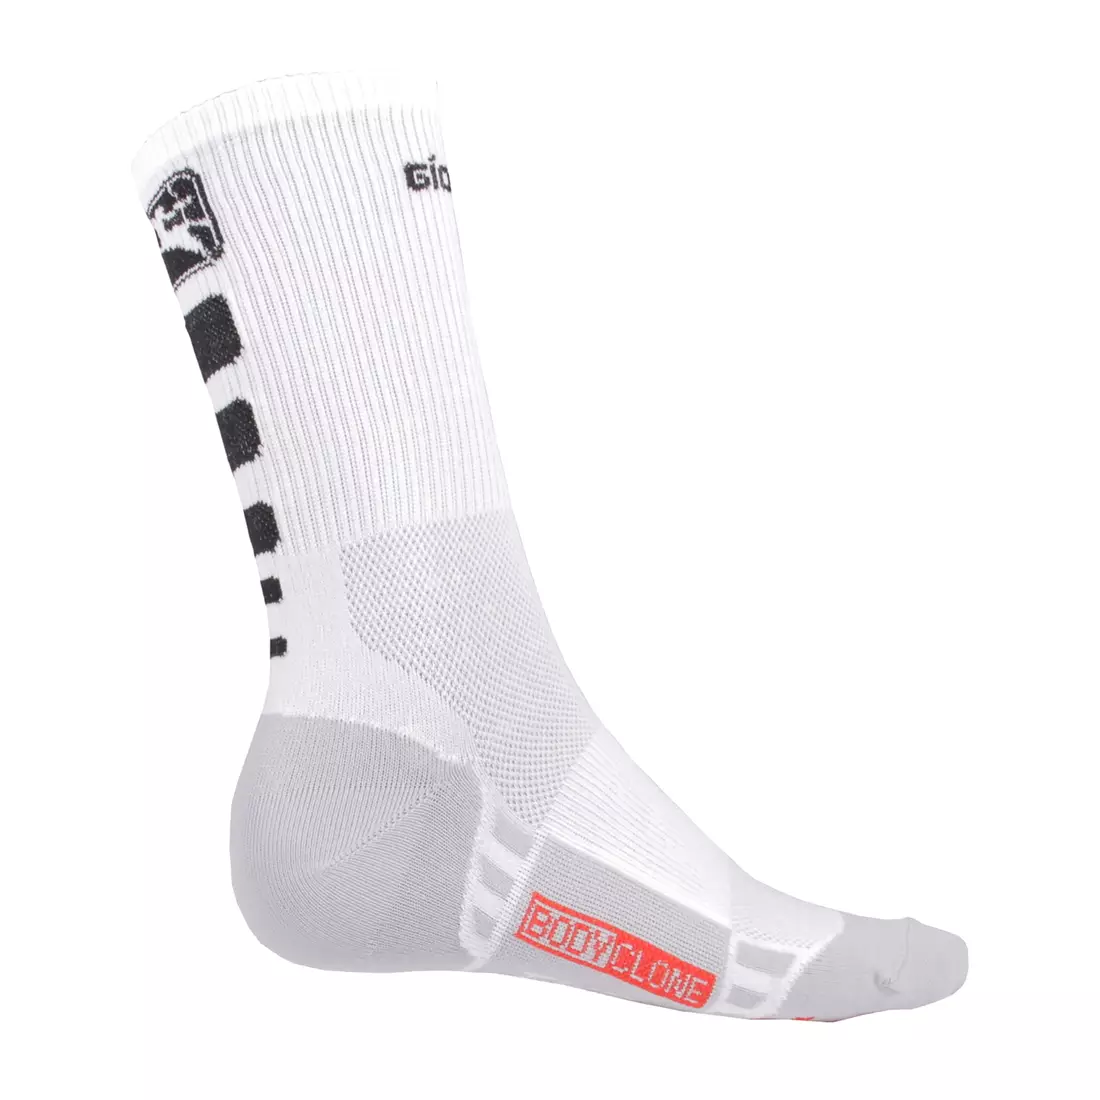 GIORDANA FR-C TALL SOCKS white and black cycling socks